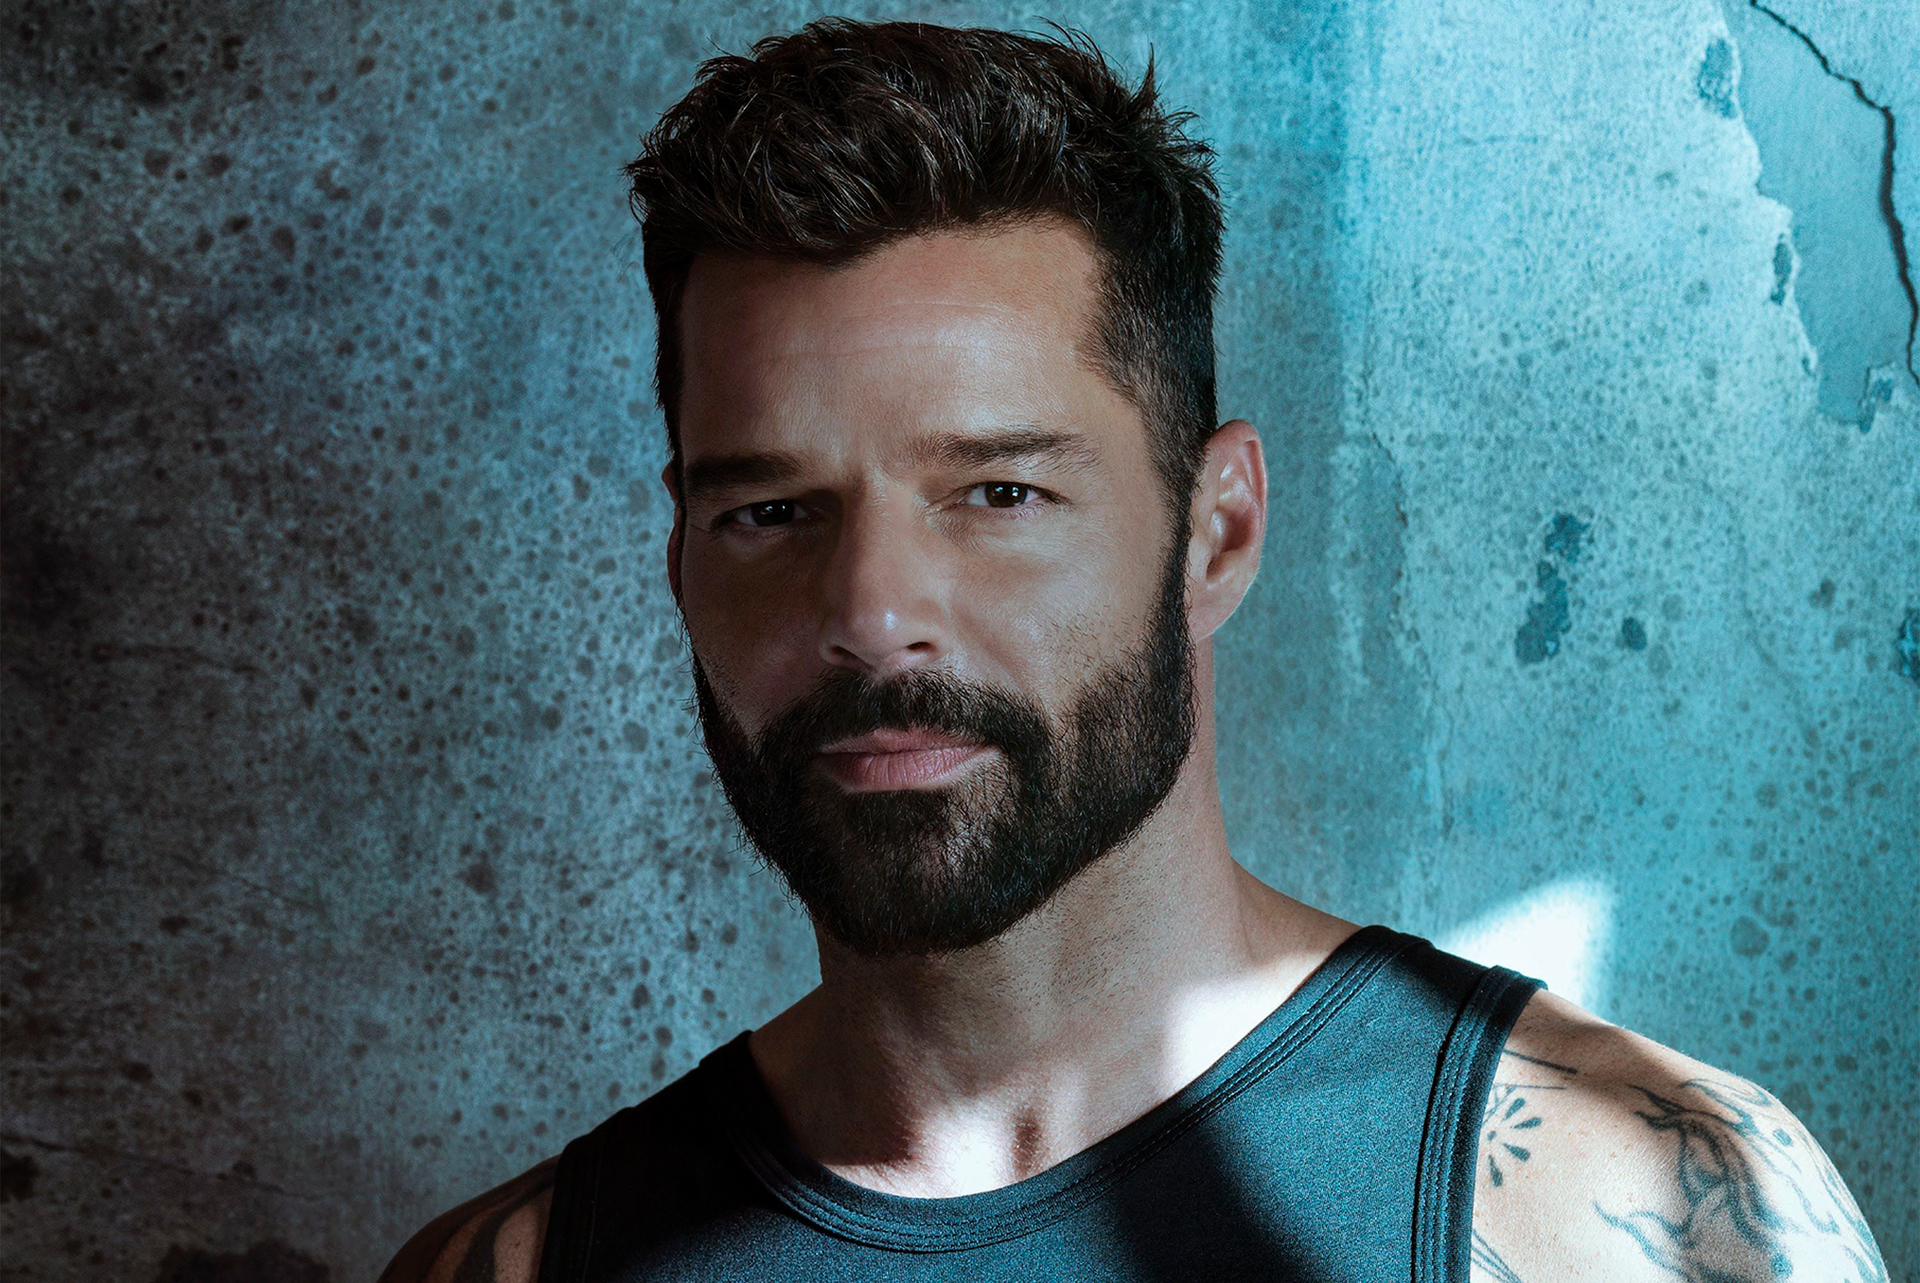 Ricky Martin enfrenta nuevamente denuncia por agresión sexual